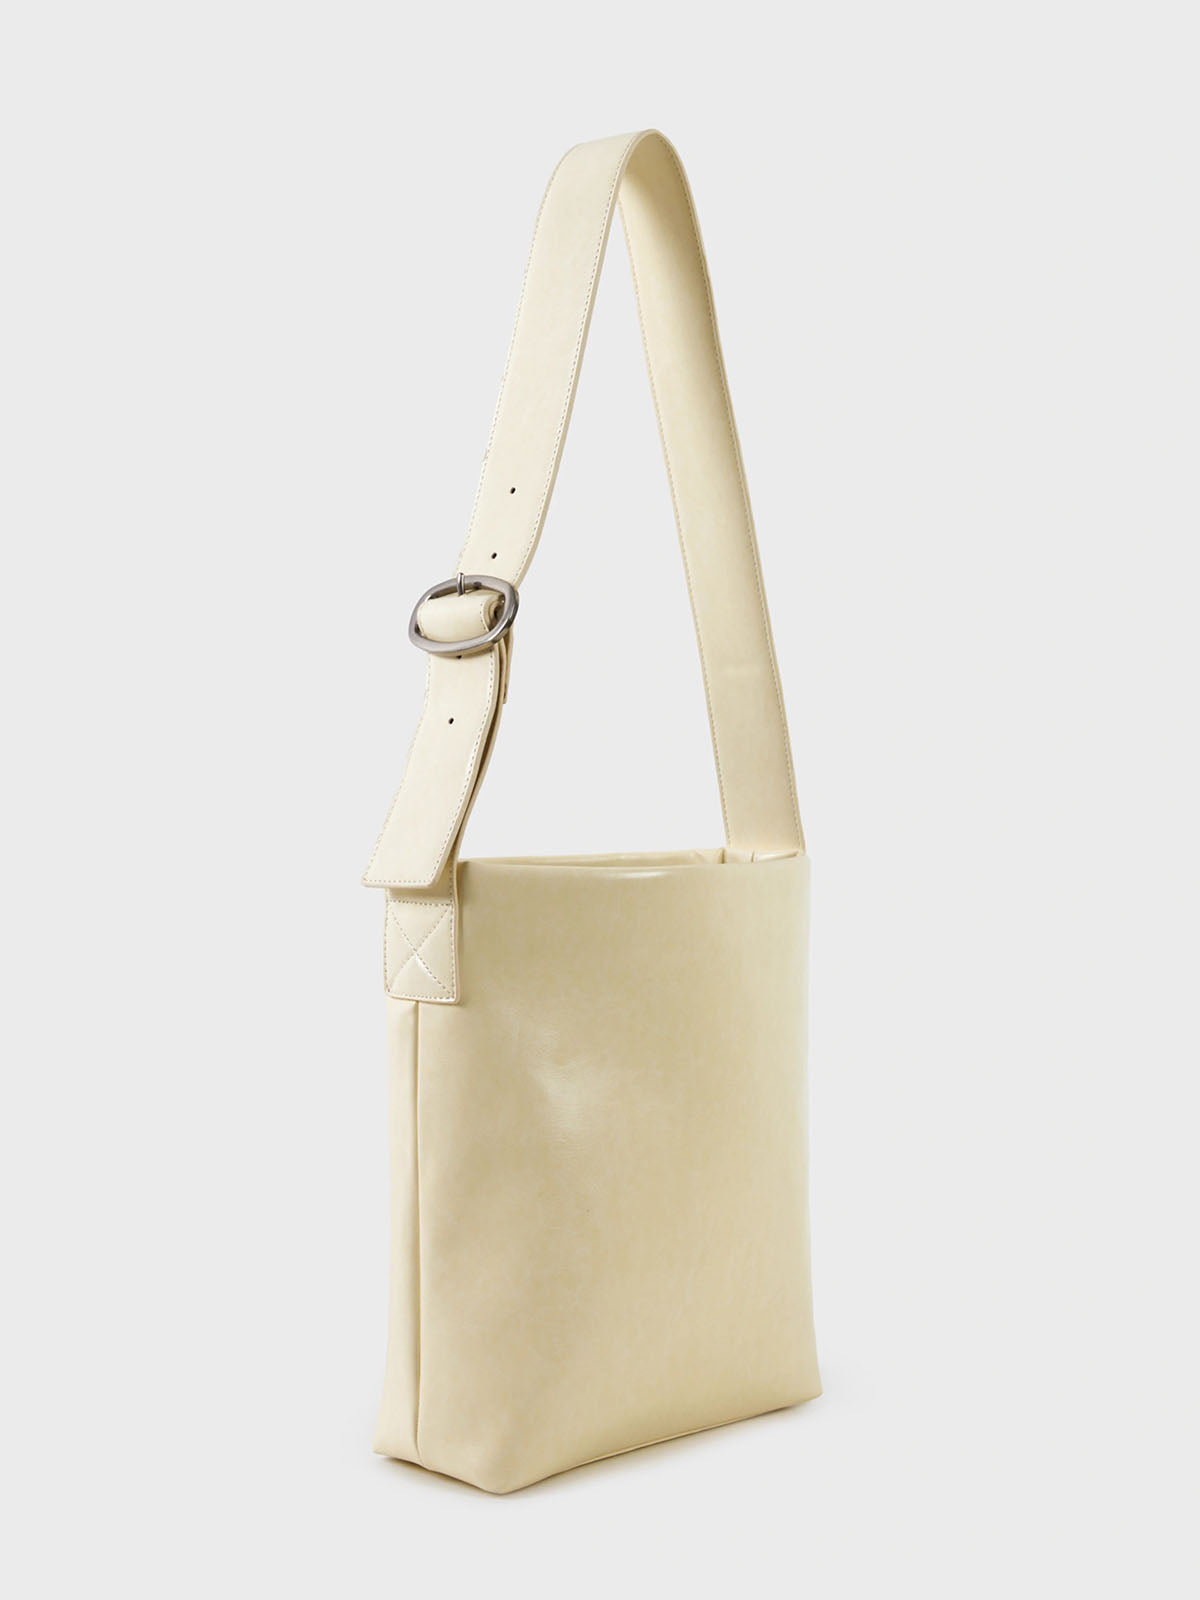 creeper Women's Handbag/Shoulder bag With 3 Zipper Pocket (Black) :  Amazon.in: Fashion